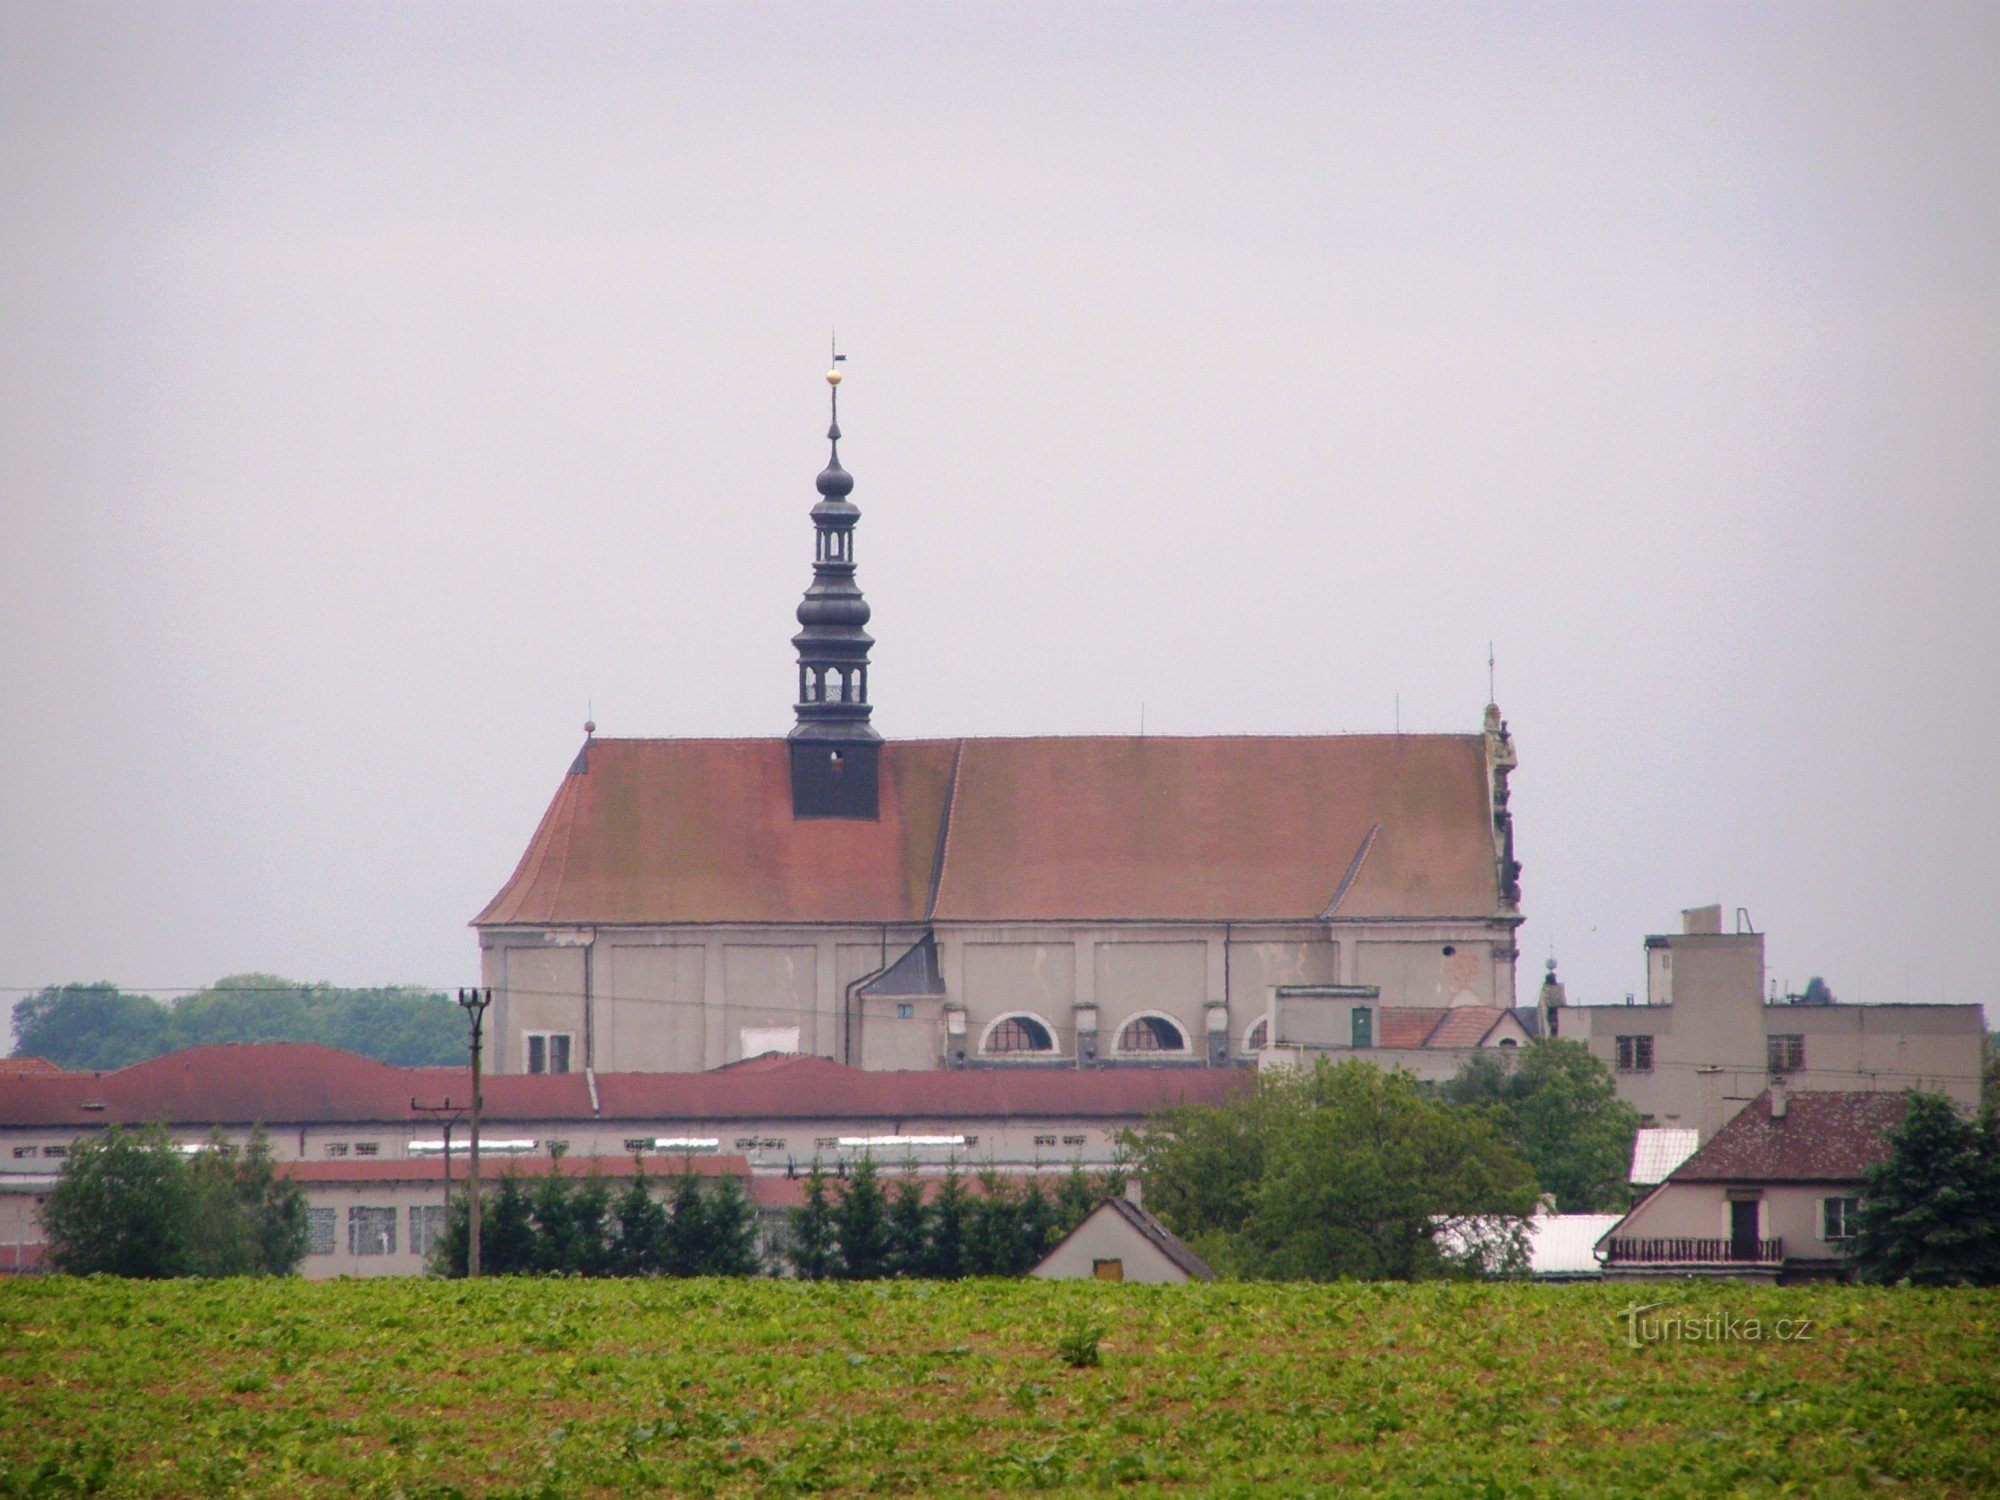 Valdice - kartuserklostret (kartusianer)